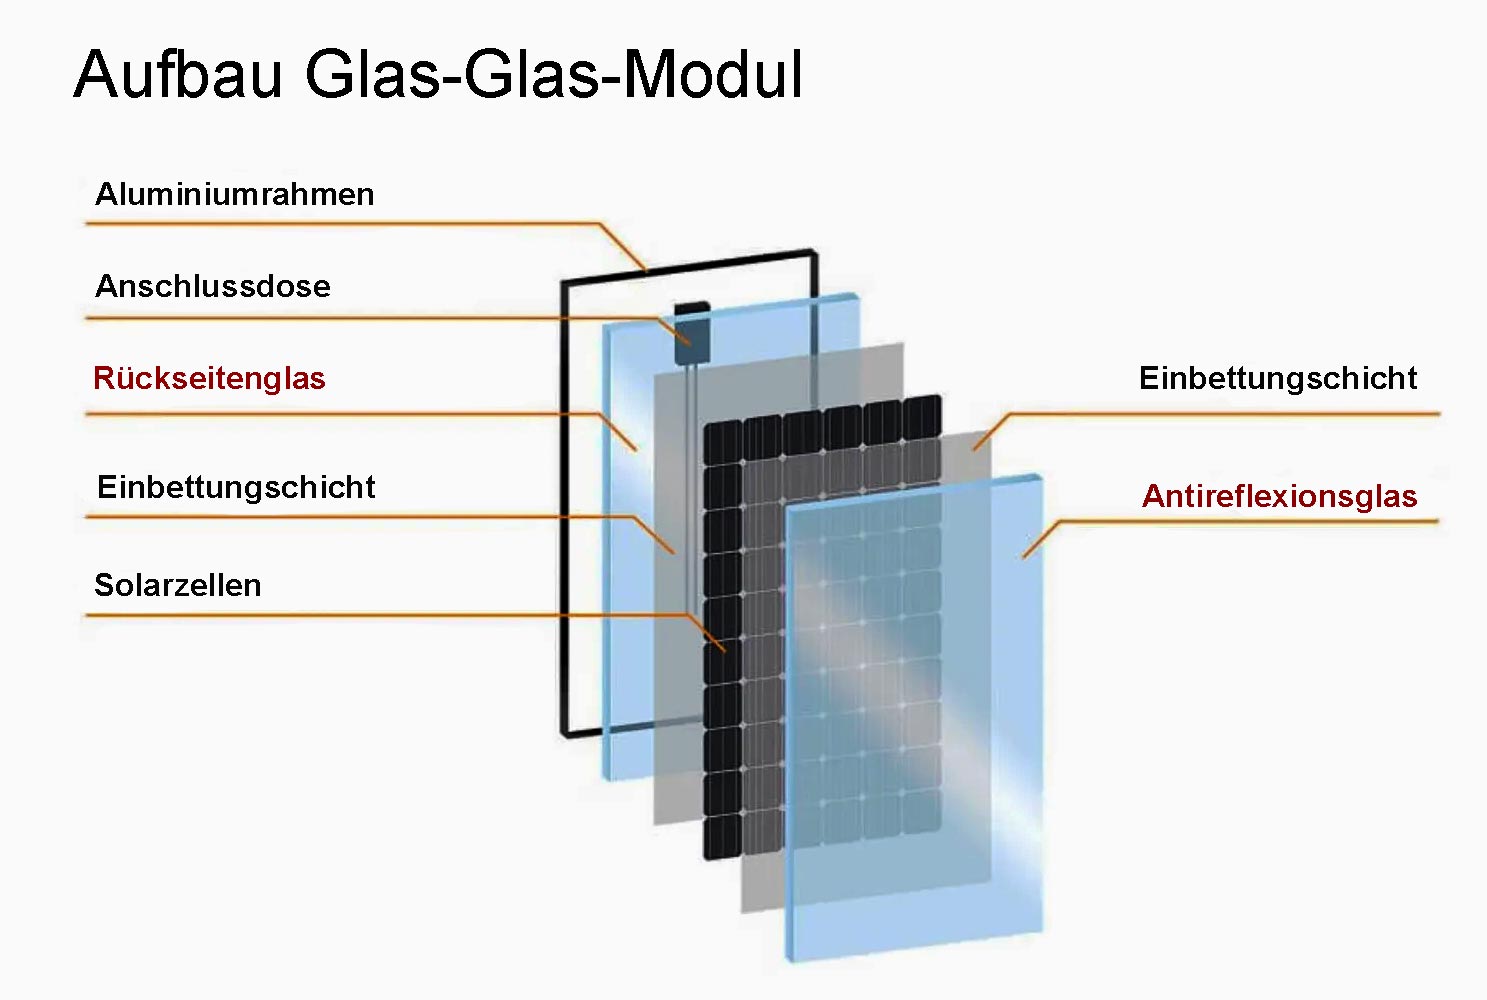 Aufbau eines Glas-Glas-Moduls